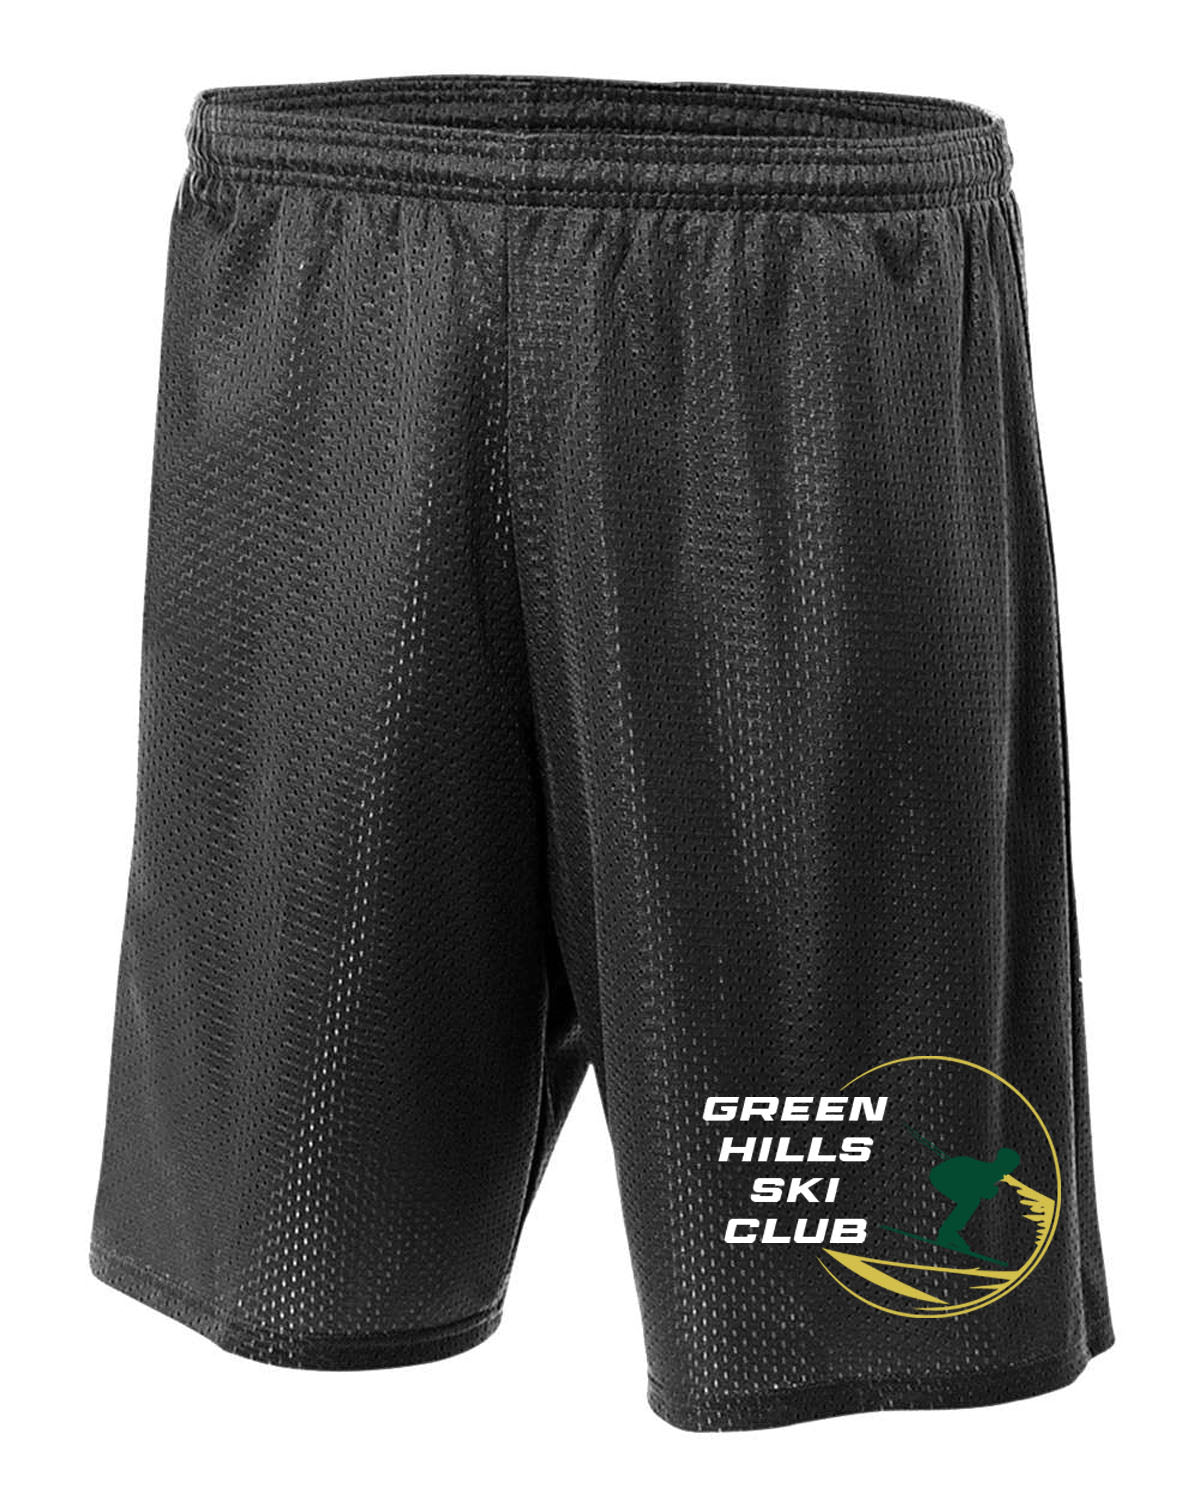 Green Hills Ski Club Design 1 Mesh Shorts